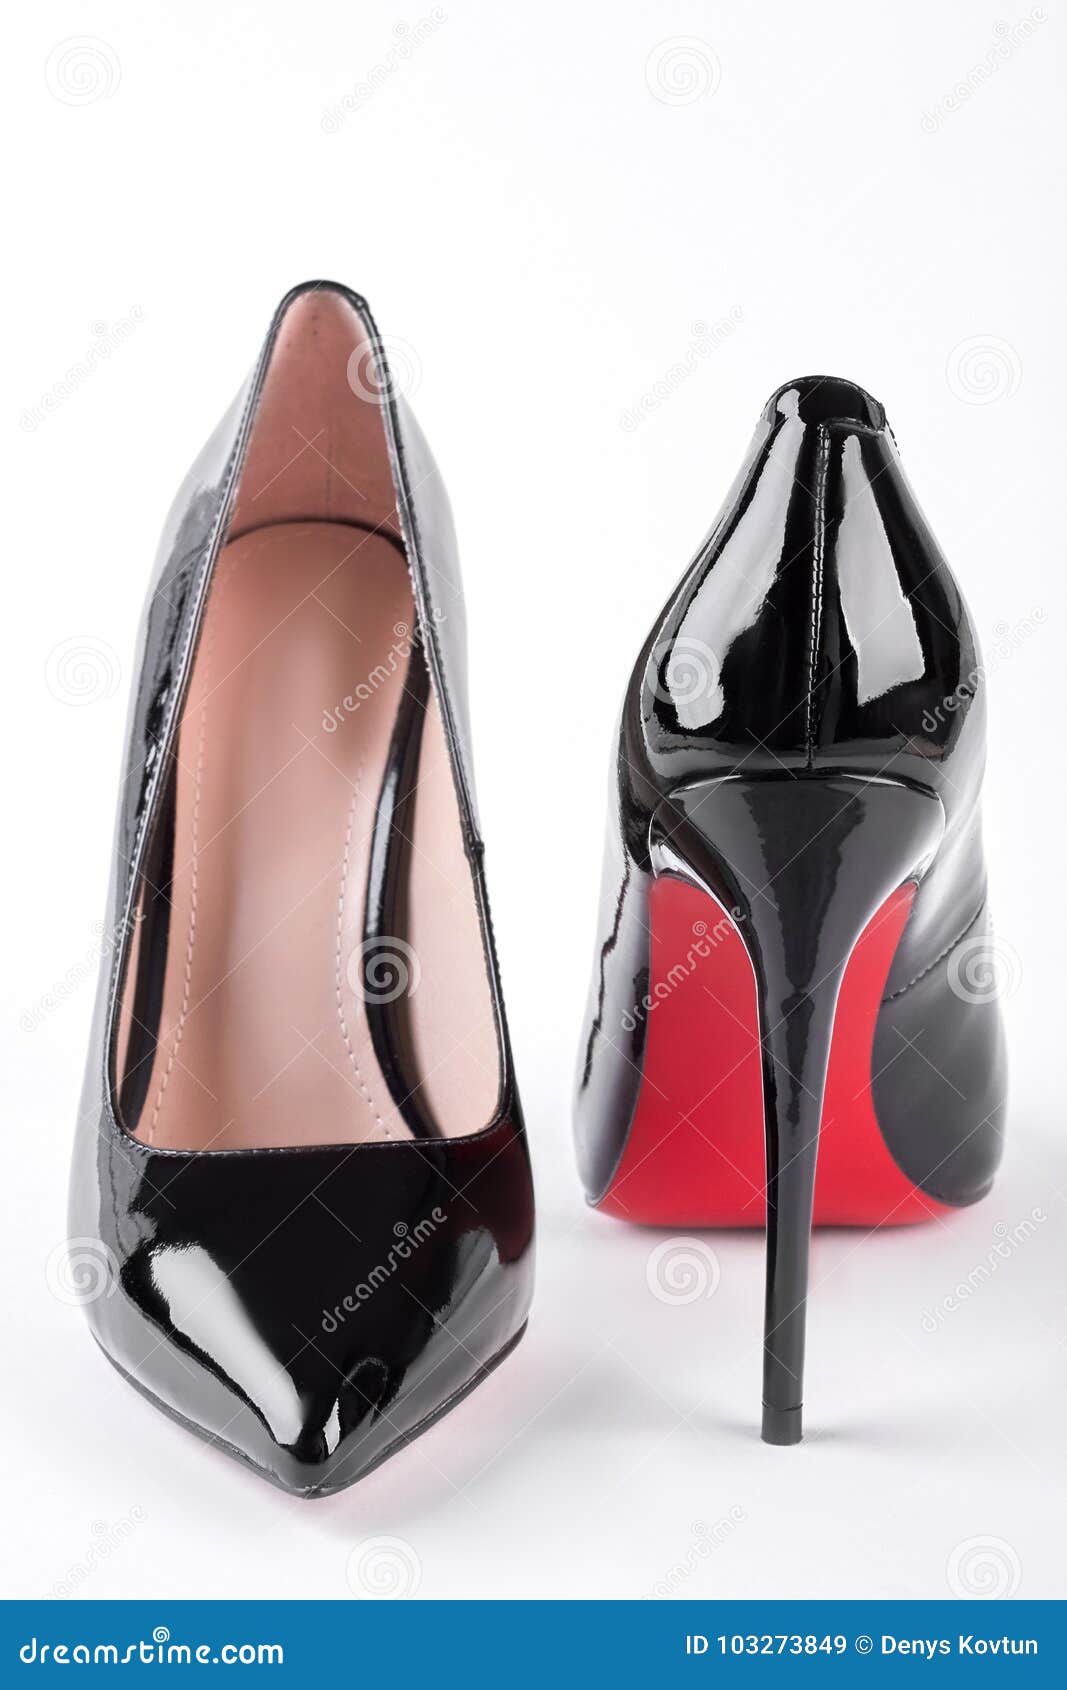 ladies louboutin shoes